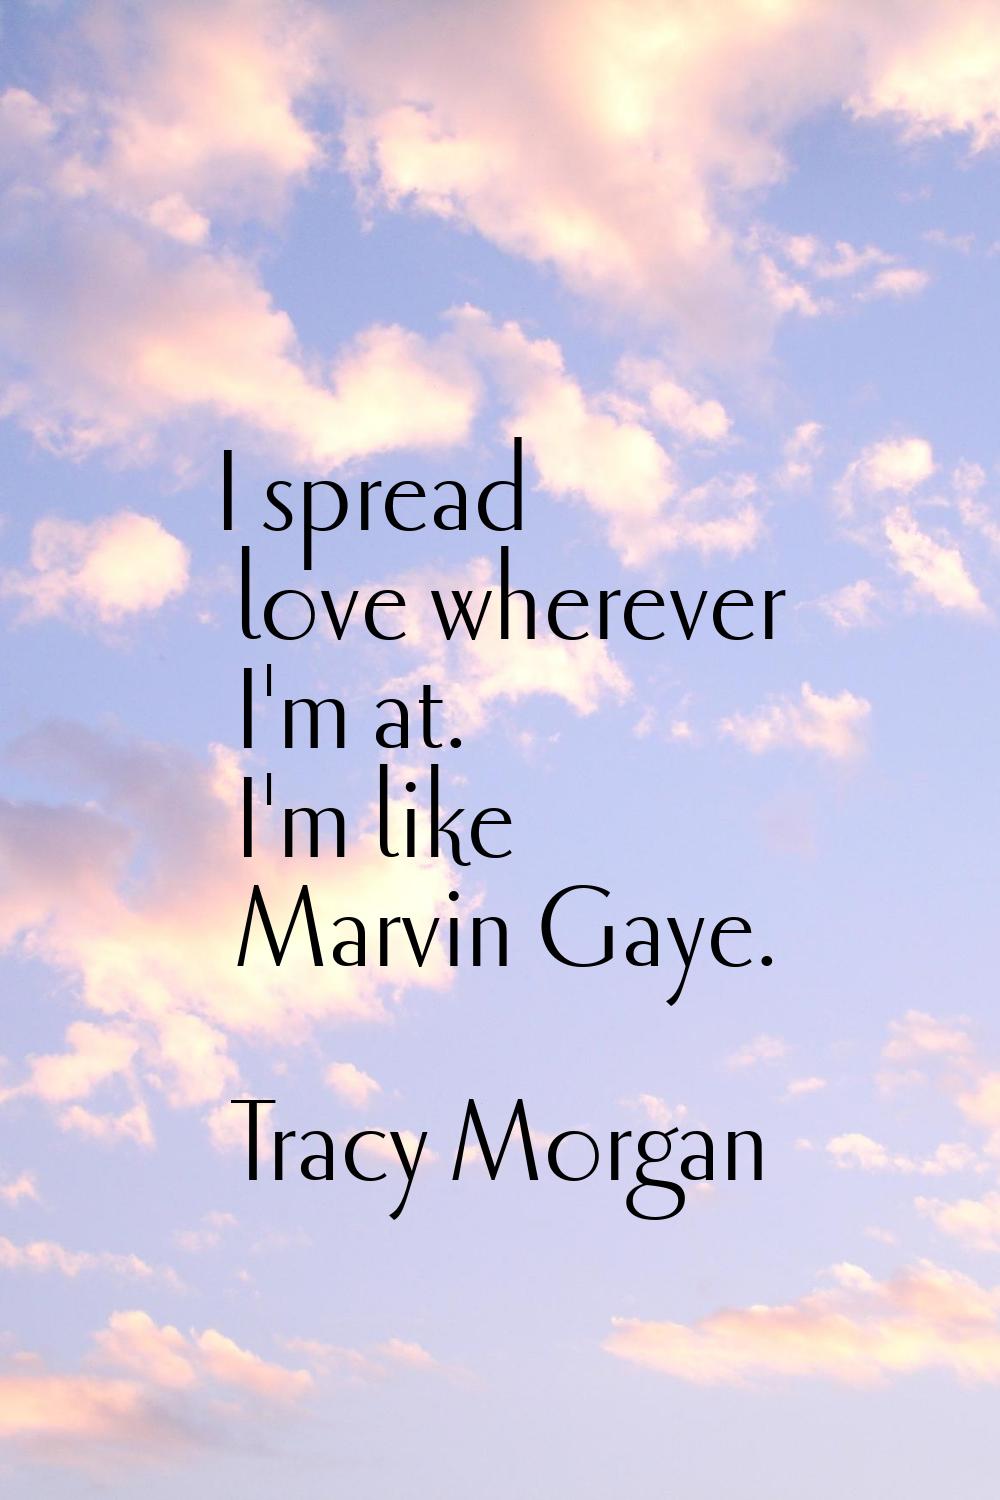 I spread love wherever I'm at. I'm like Marvin Gaye.